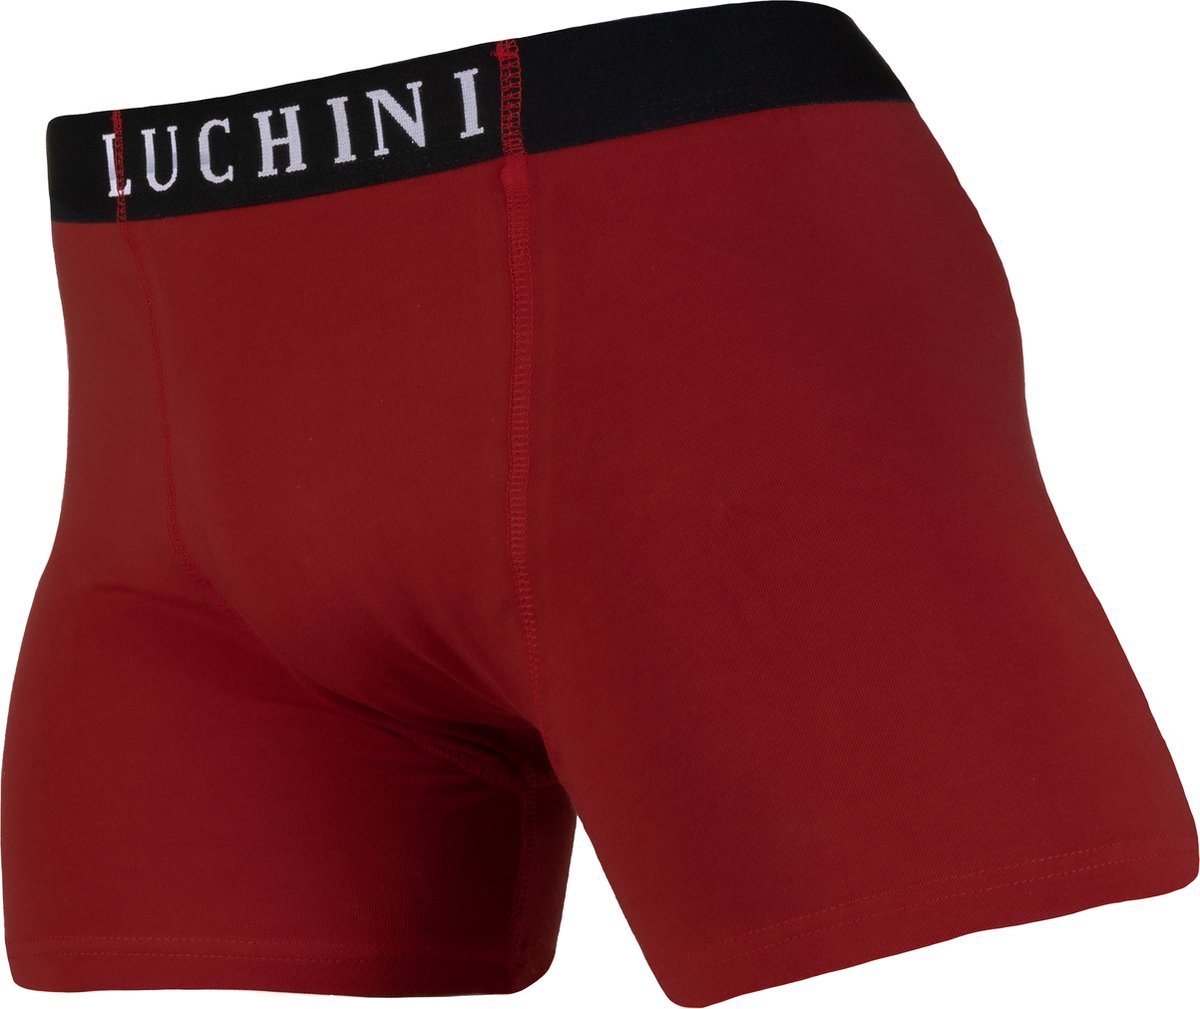 Luchini Clothing ® - LC Classic Maat S - Premium Boxershorts heren - Heren Privacy Boxers met verborgen vak - 2-PACK boxershorts - Stealth boxers - Rood